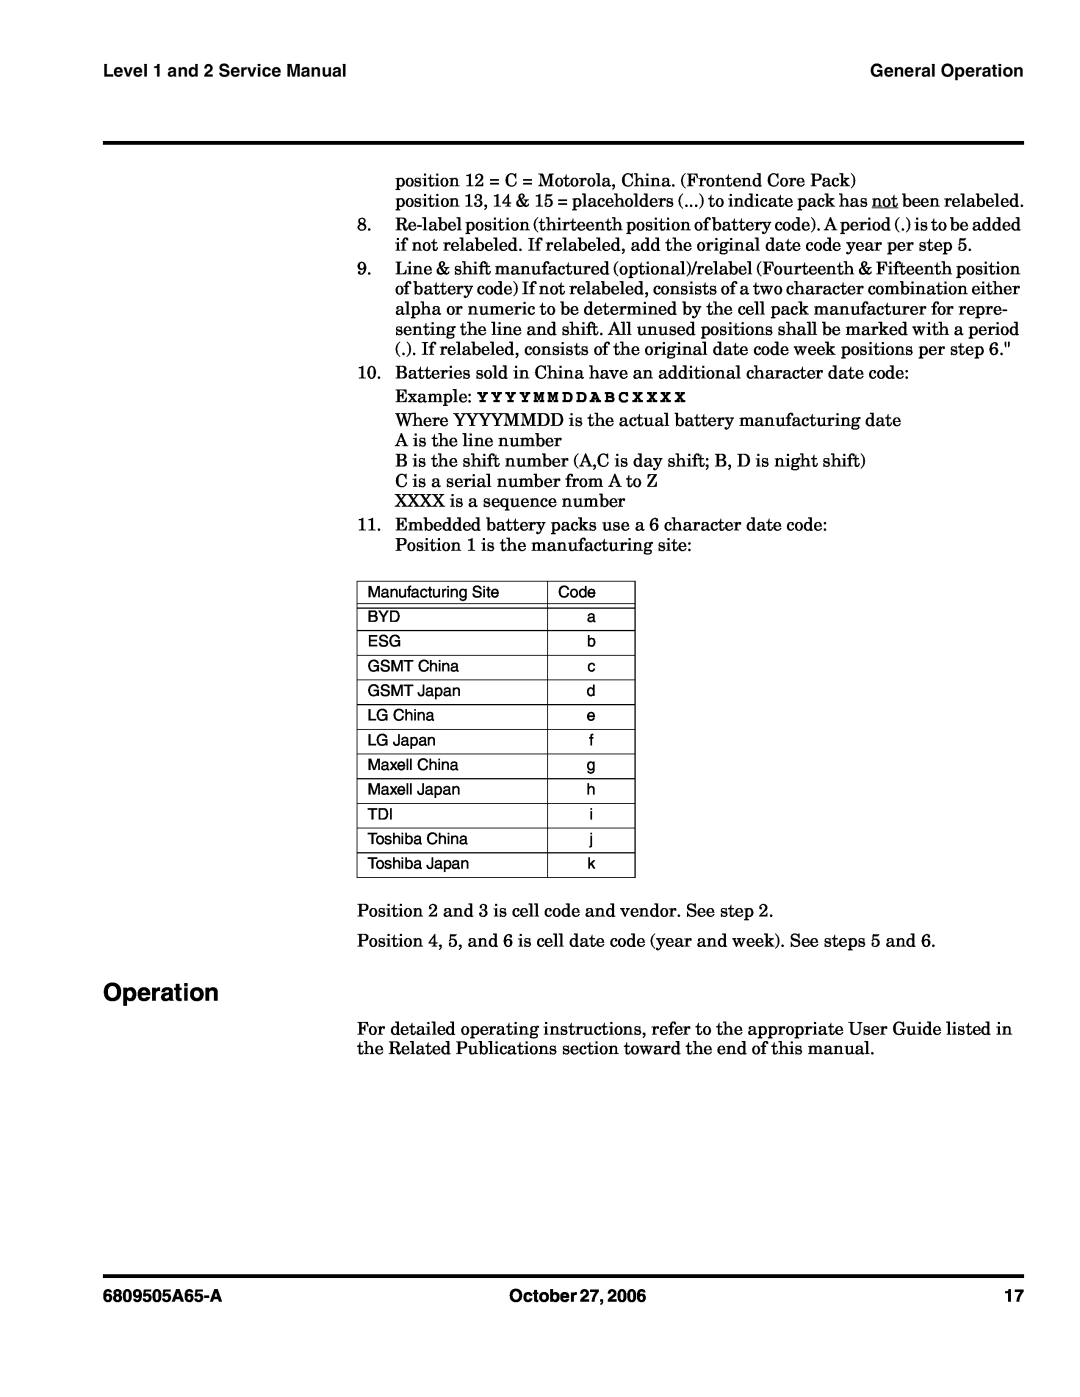 Motorola F3 service manual Operation, Level 1 and 2 Service Manual, 6809505A65-A, October 27 